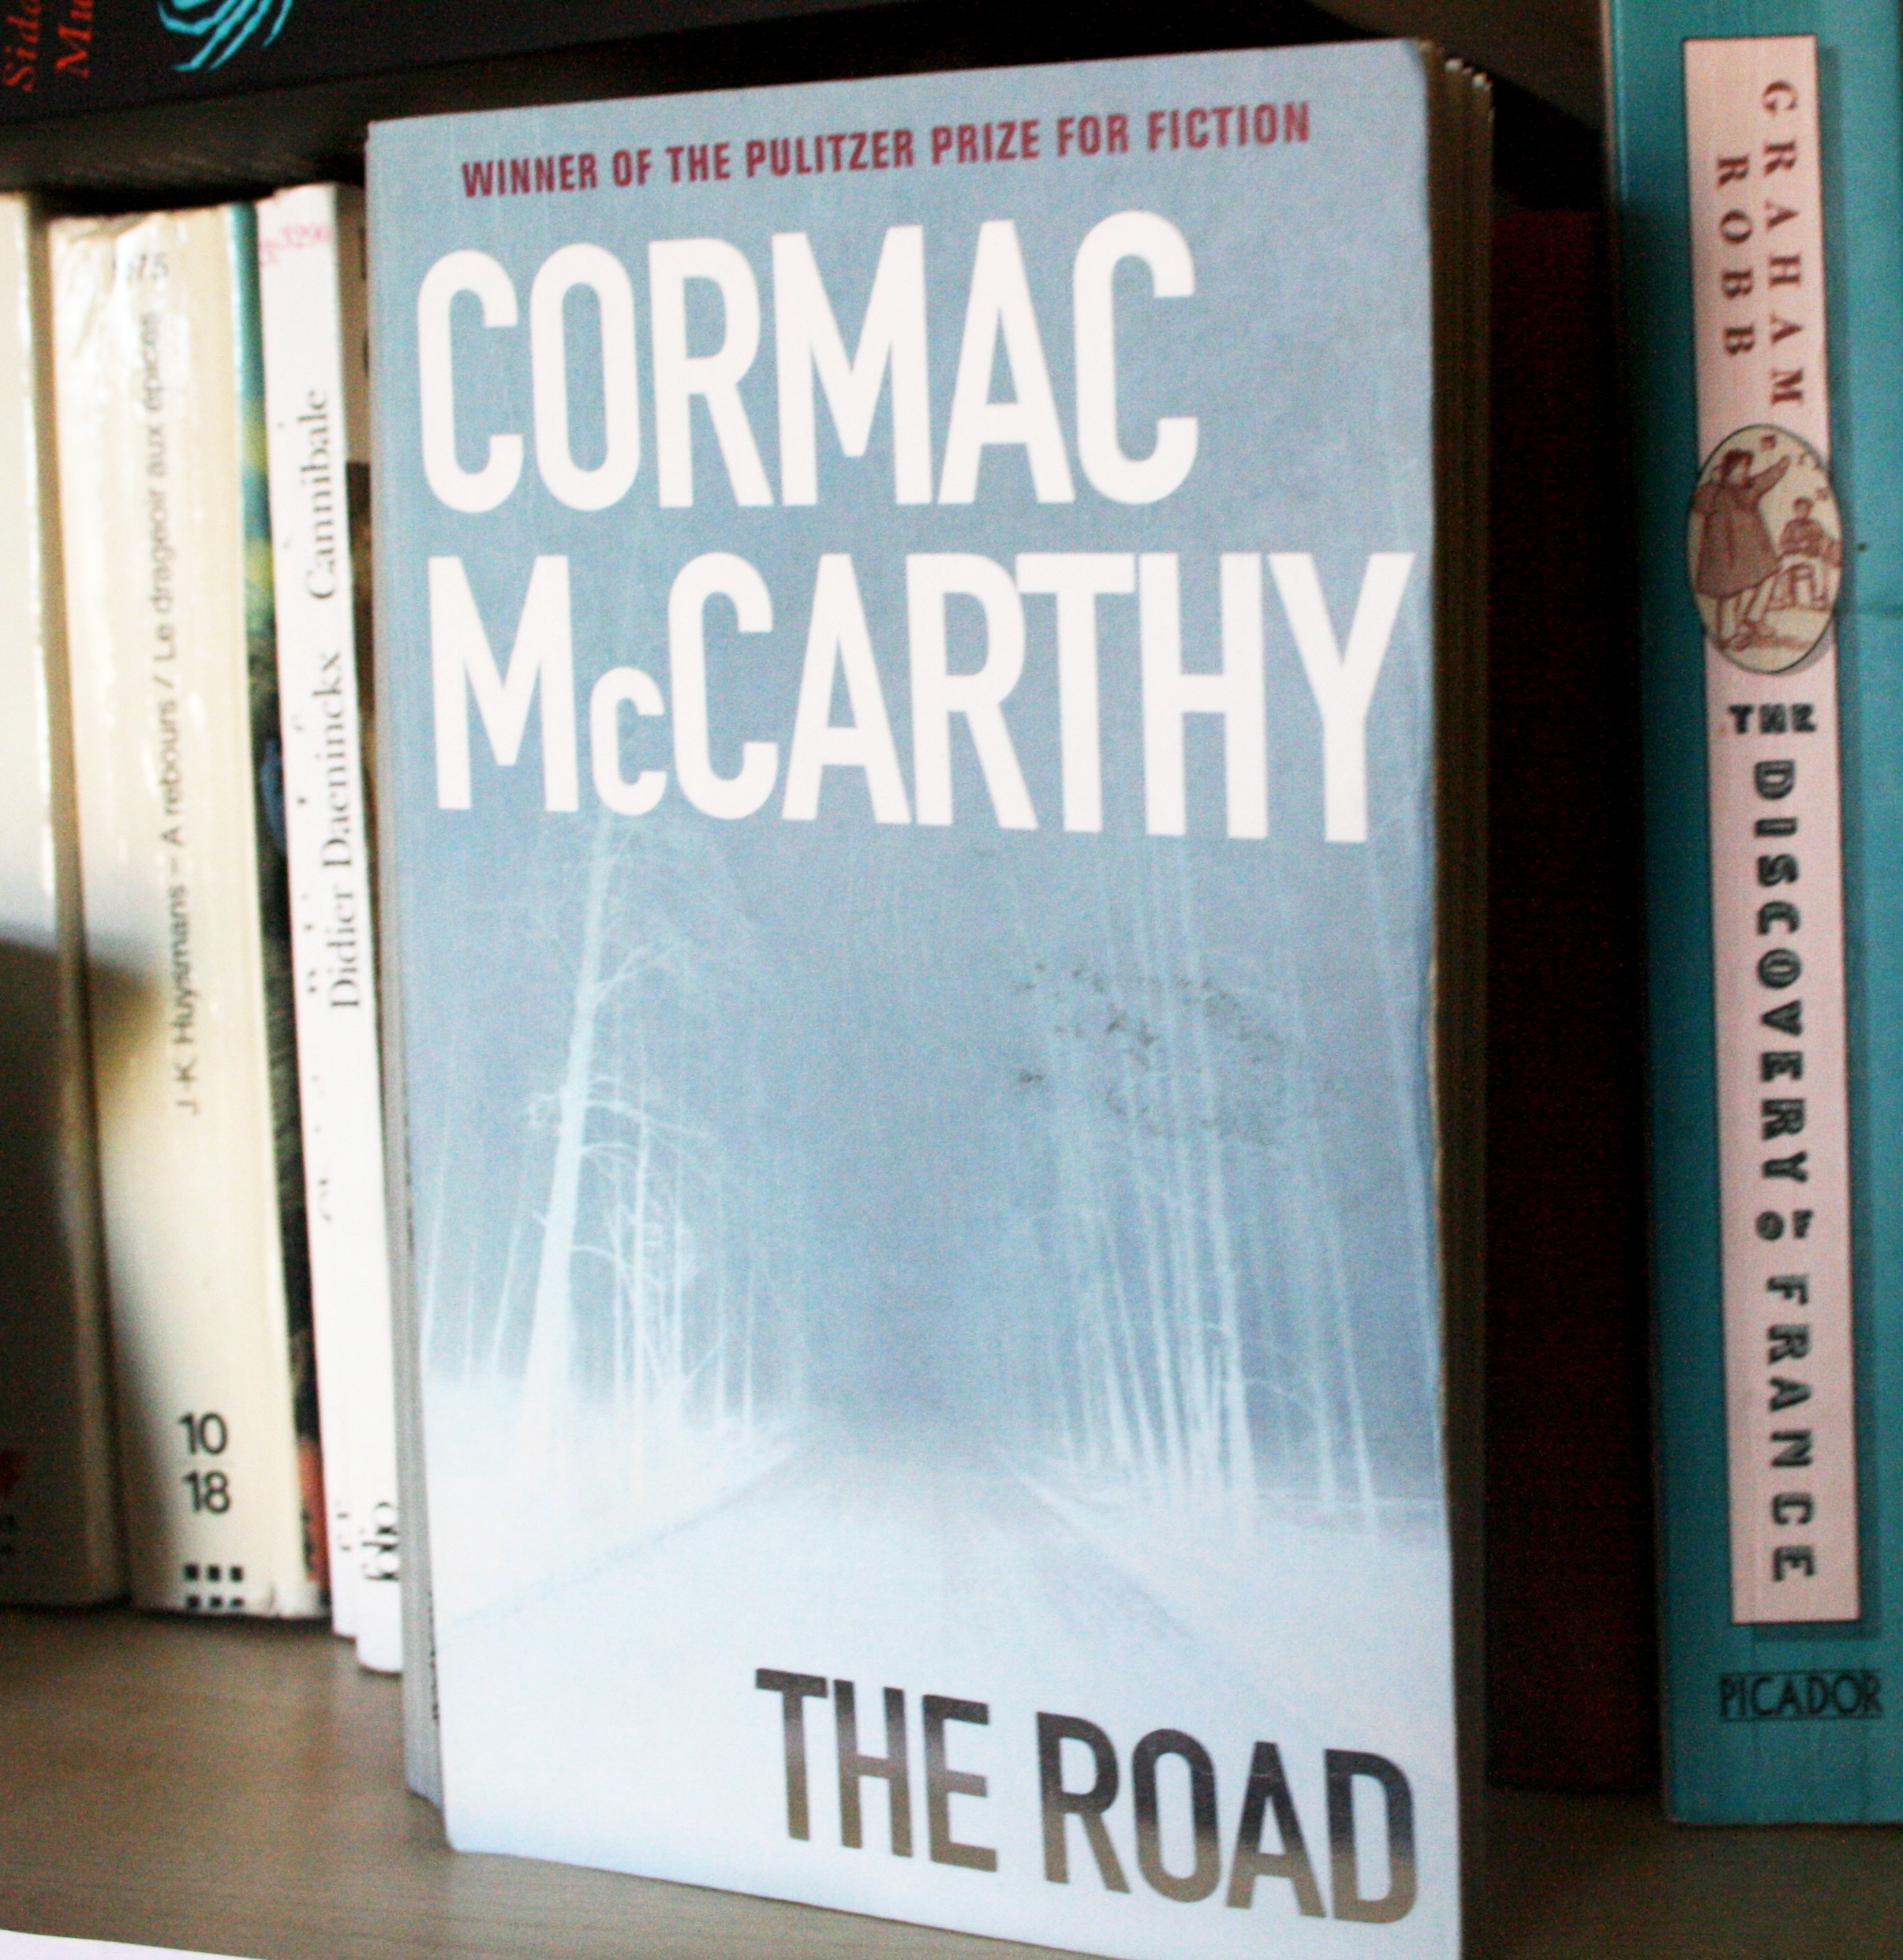 Buy essay online cheap cormac mccarthy